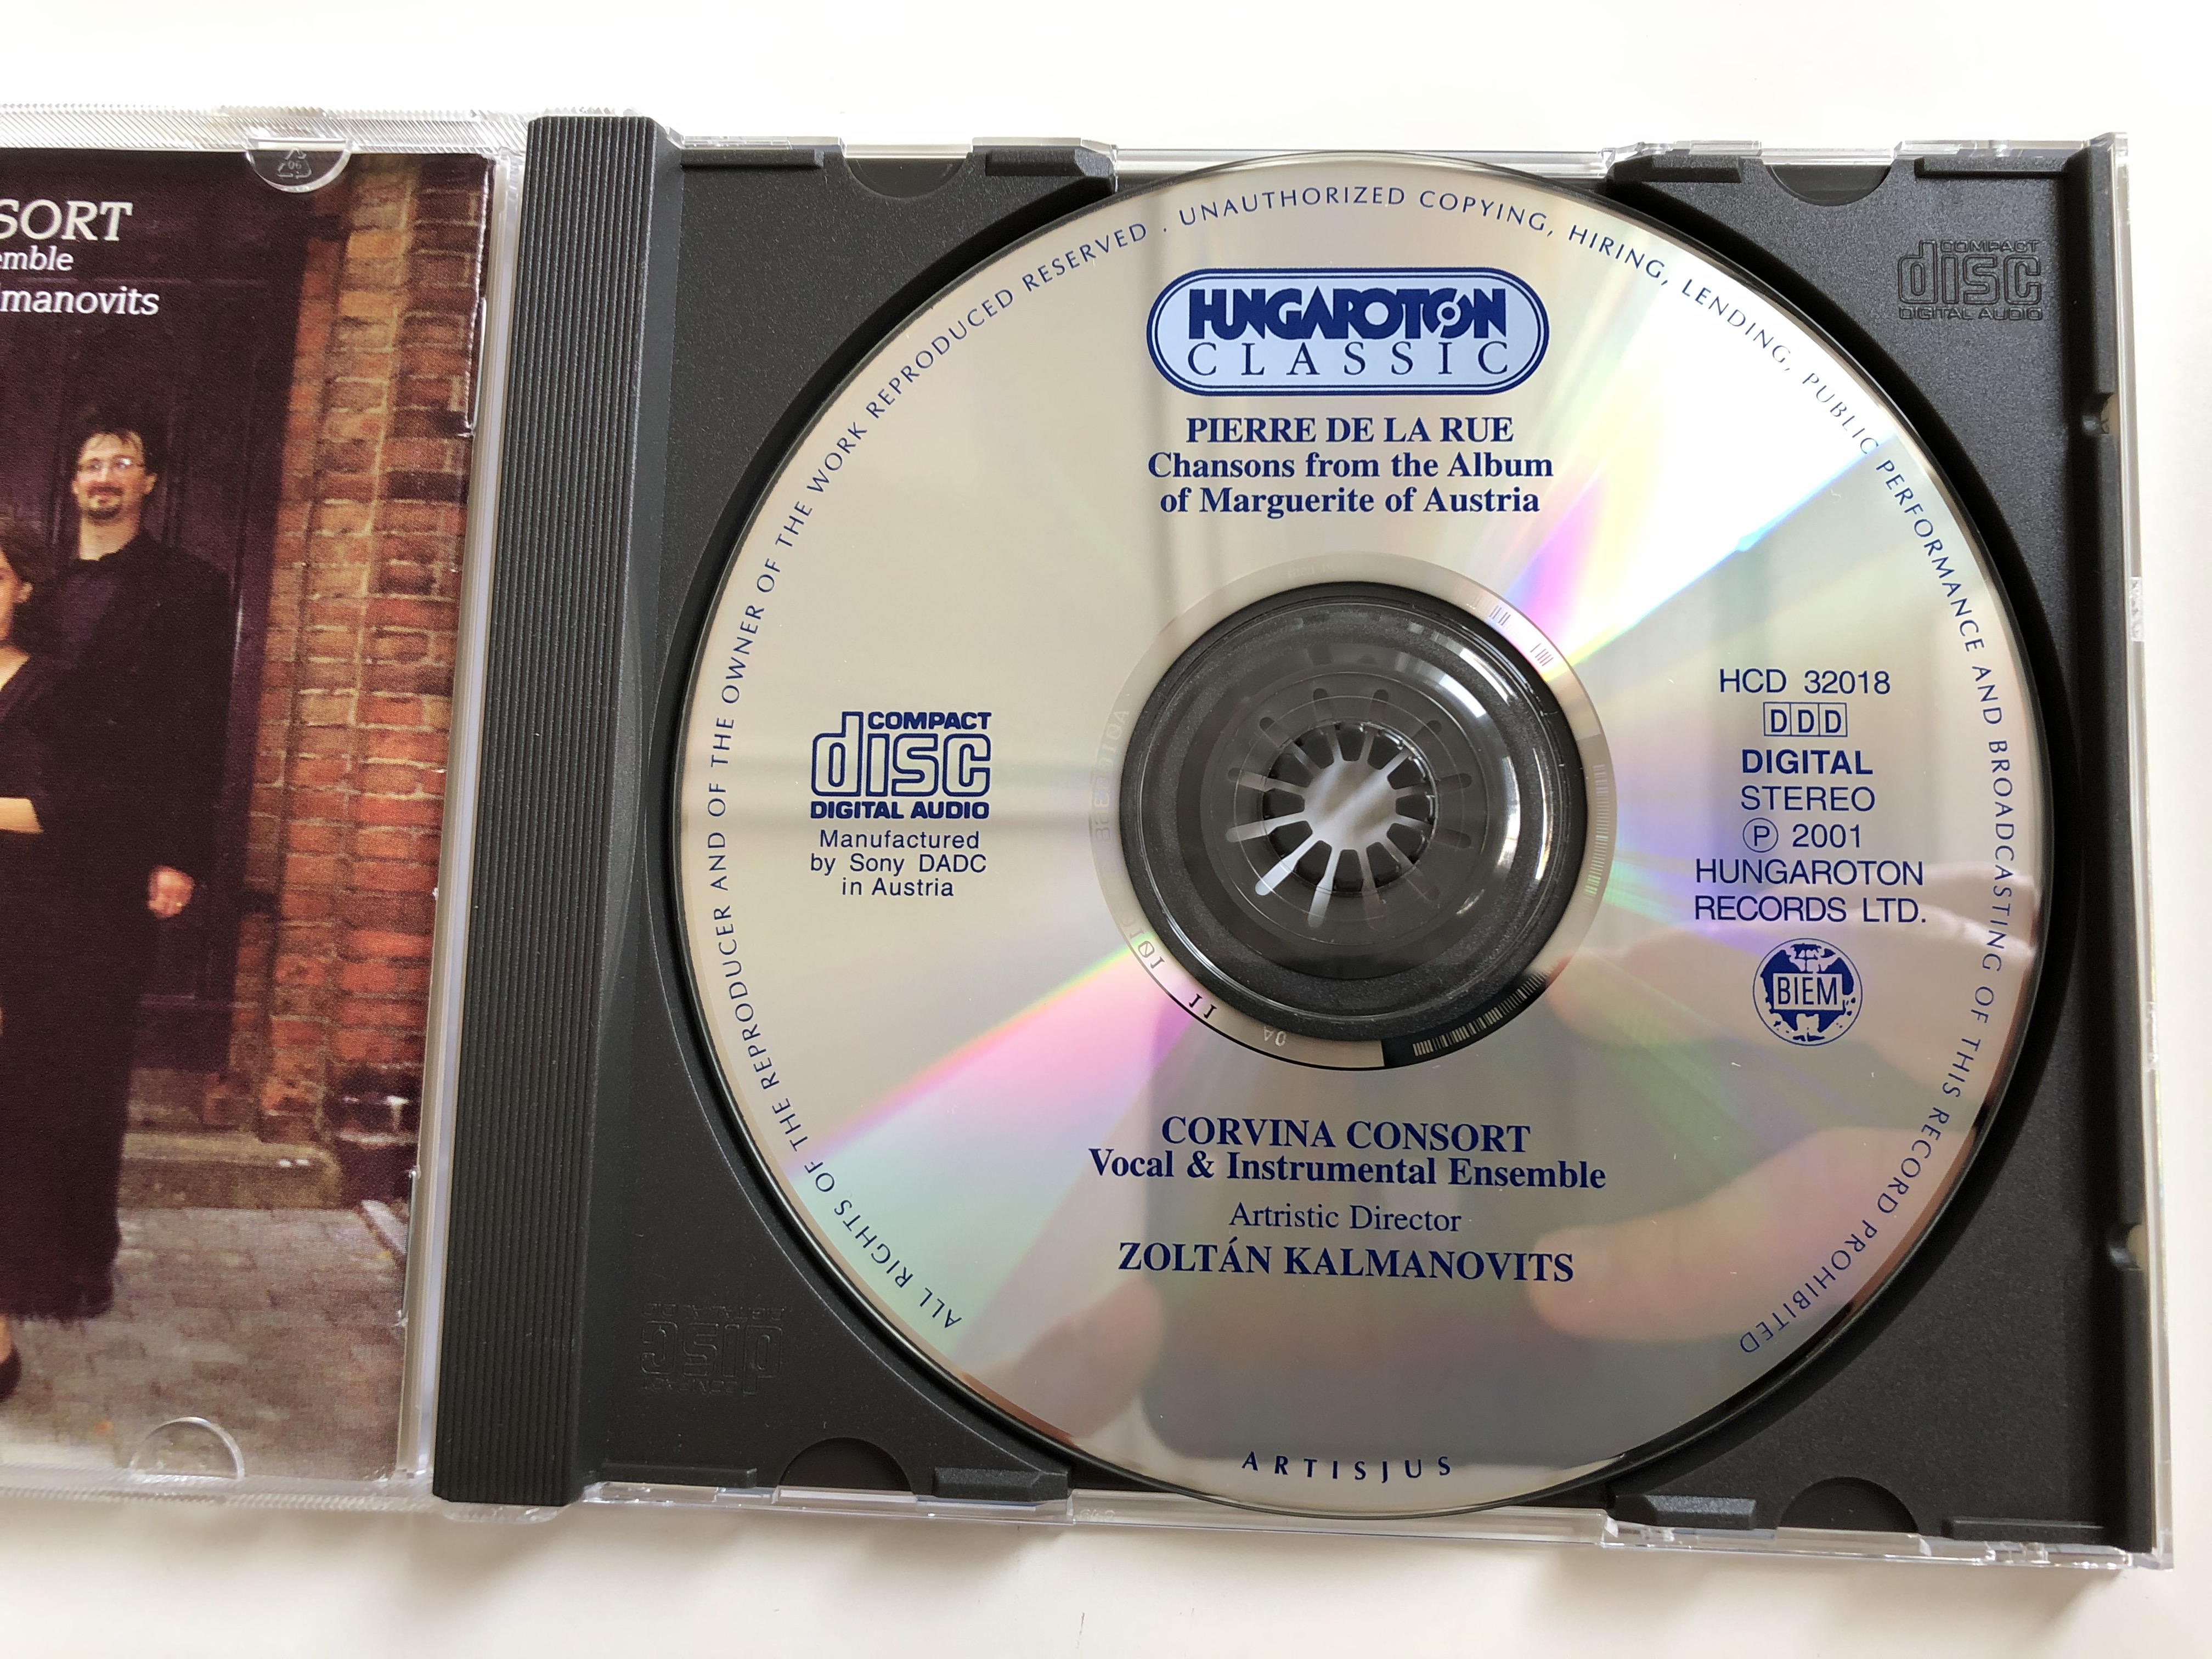 pierre-de-la-rue-chansons-from-album-of-marguerite-of-austria-corvina-consort-vocal-instrumental-ensemble-artistic-director-zoltan-kalmanovits-hungaroton-classic-audio-cd-2001-stereo-hcd-12-.jpg